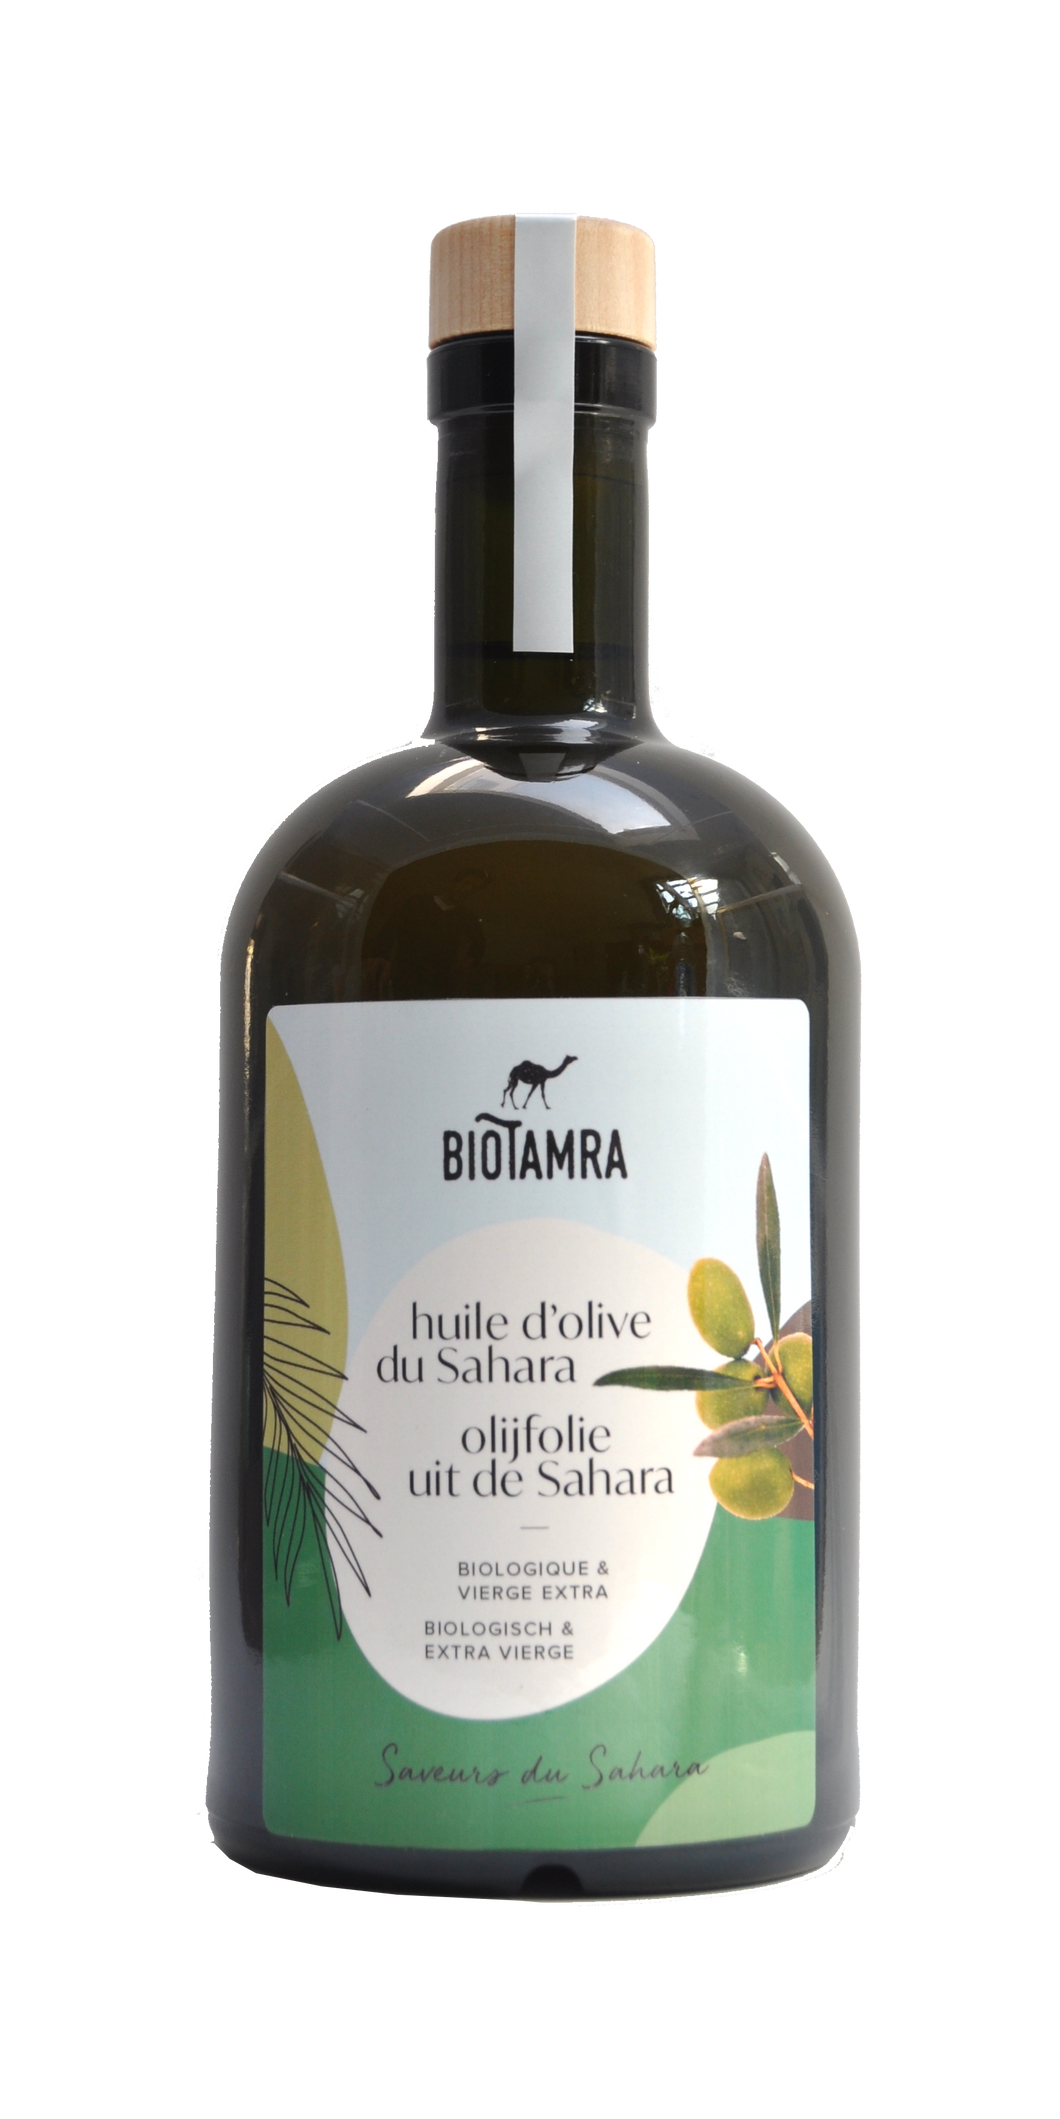 Huile d’olive vierge extra du Sahara (Bio) / Olijfolie extra vierge uit de Sahara, Algerije / 500ml